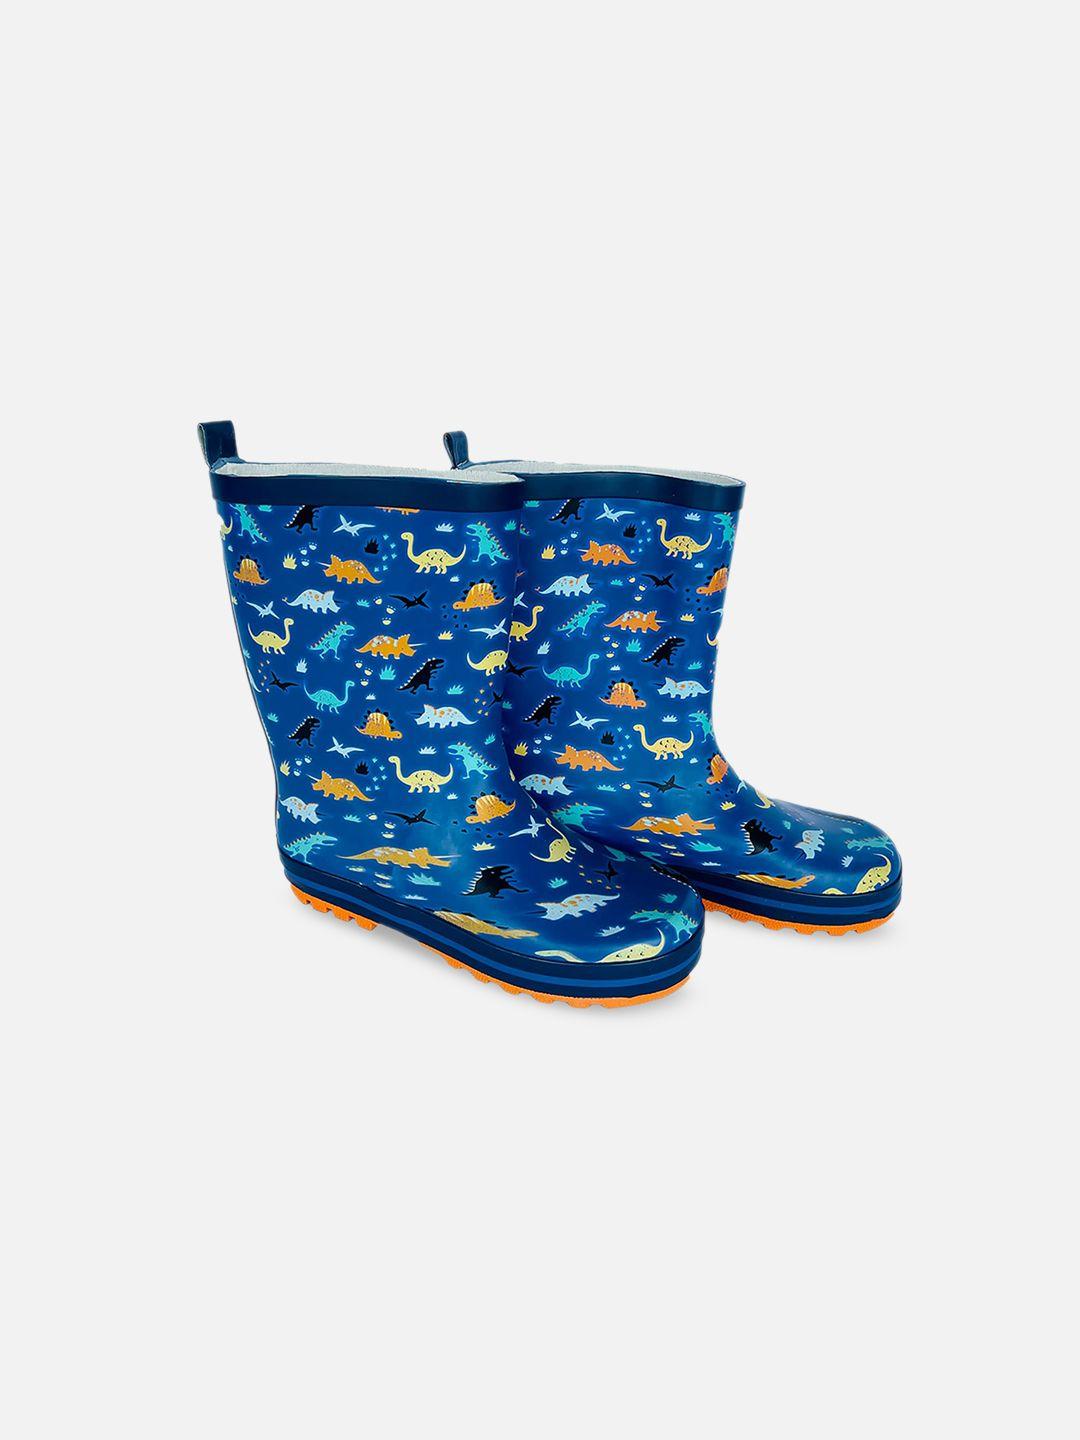 little surprise box llp kids printed waterproof mid-top rain boots